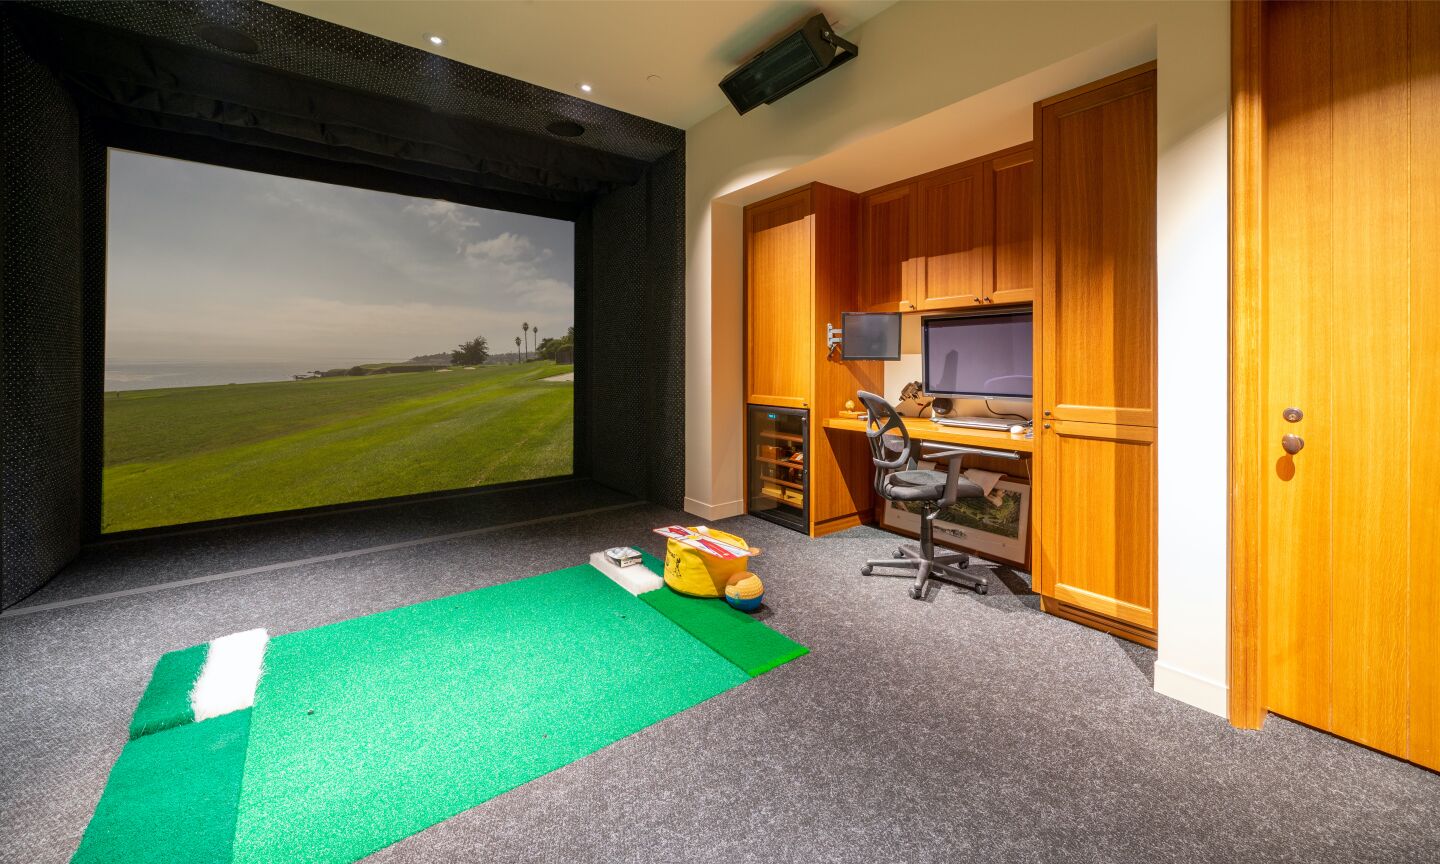 The golf simulation room.